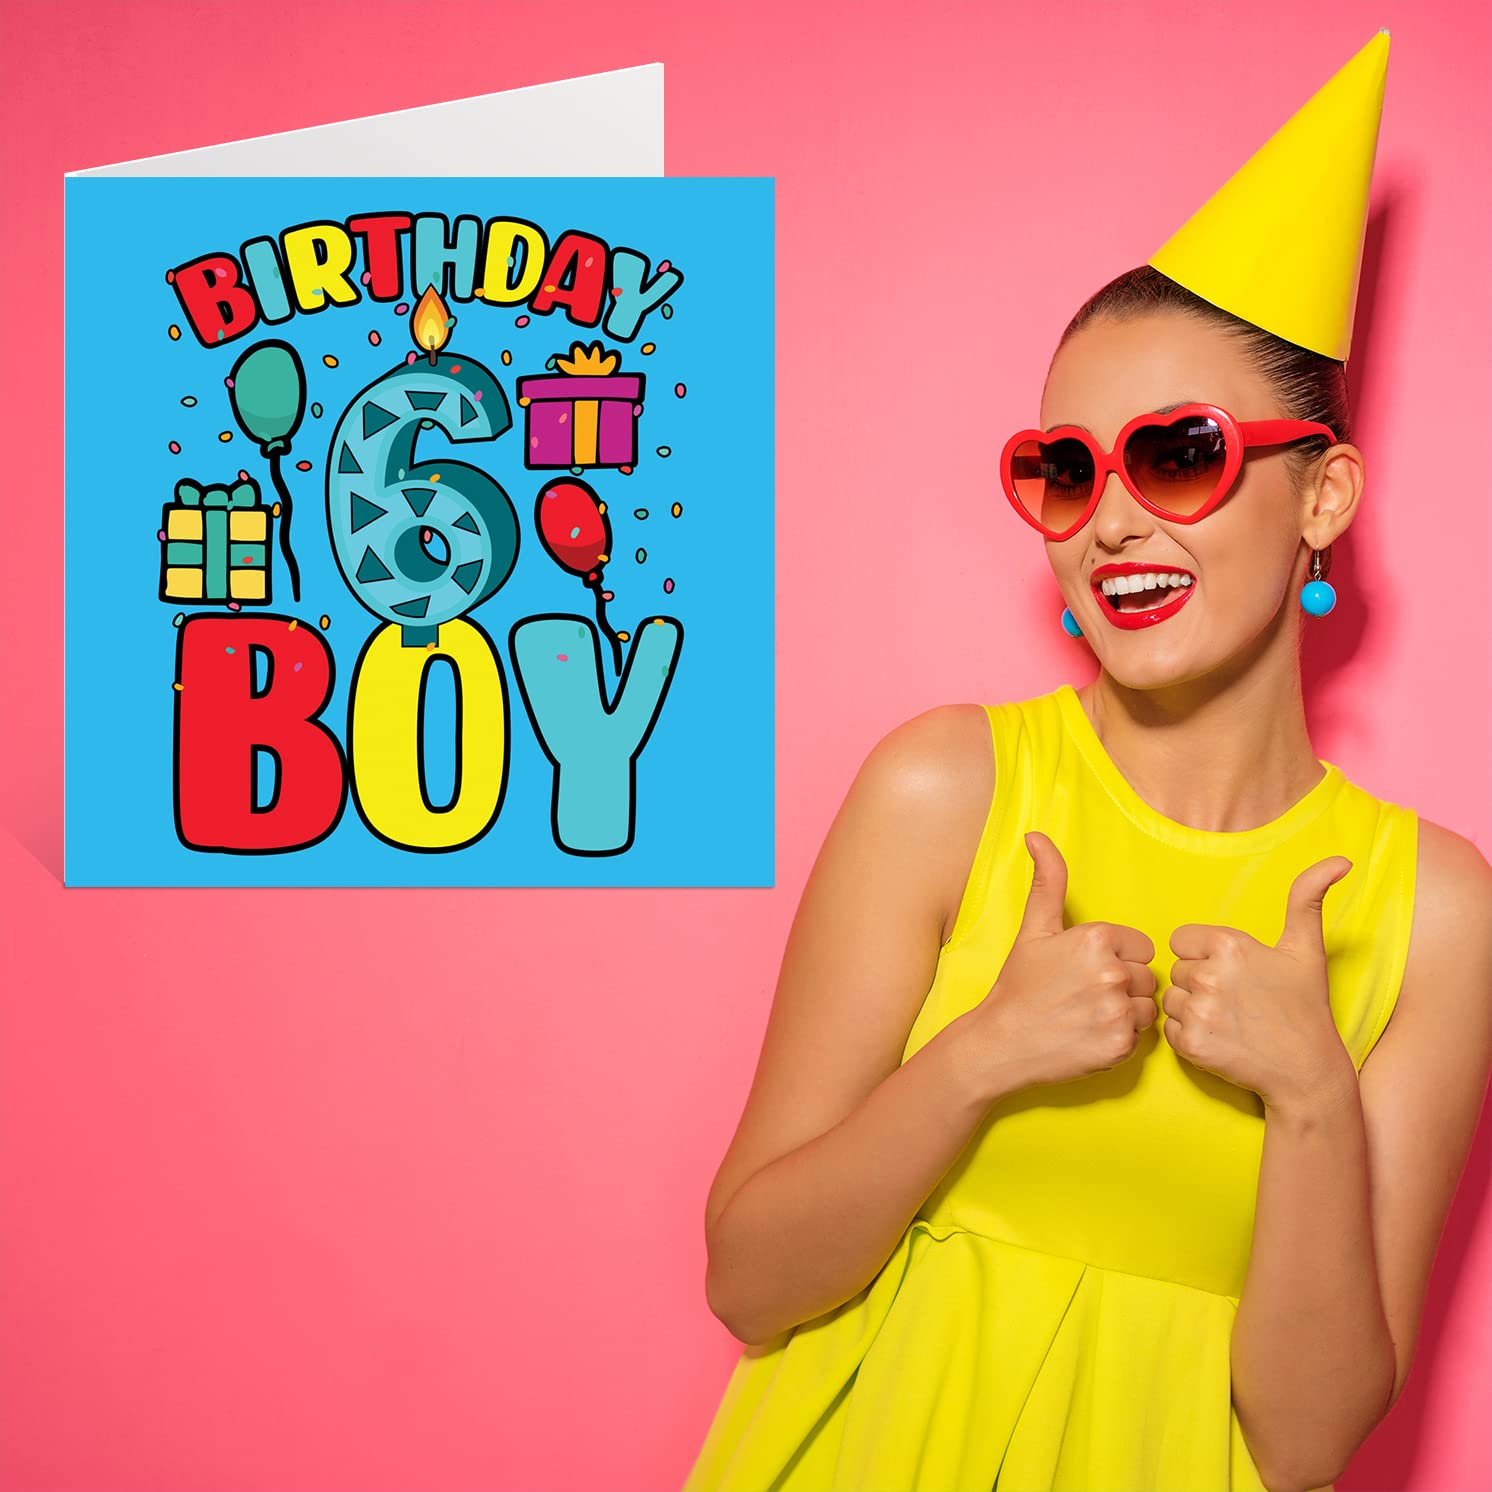 6th Birthday Card Boy - Birthday Boy - Happy Birthday Card 6 Year Old Boy, Boys Birthday Cards for Him, 145mm x 145mm Greeting Card for Son Brother Grandson Nephew Cousin God Son, Sixth Birthday